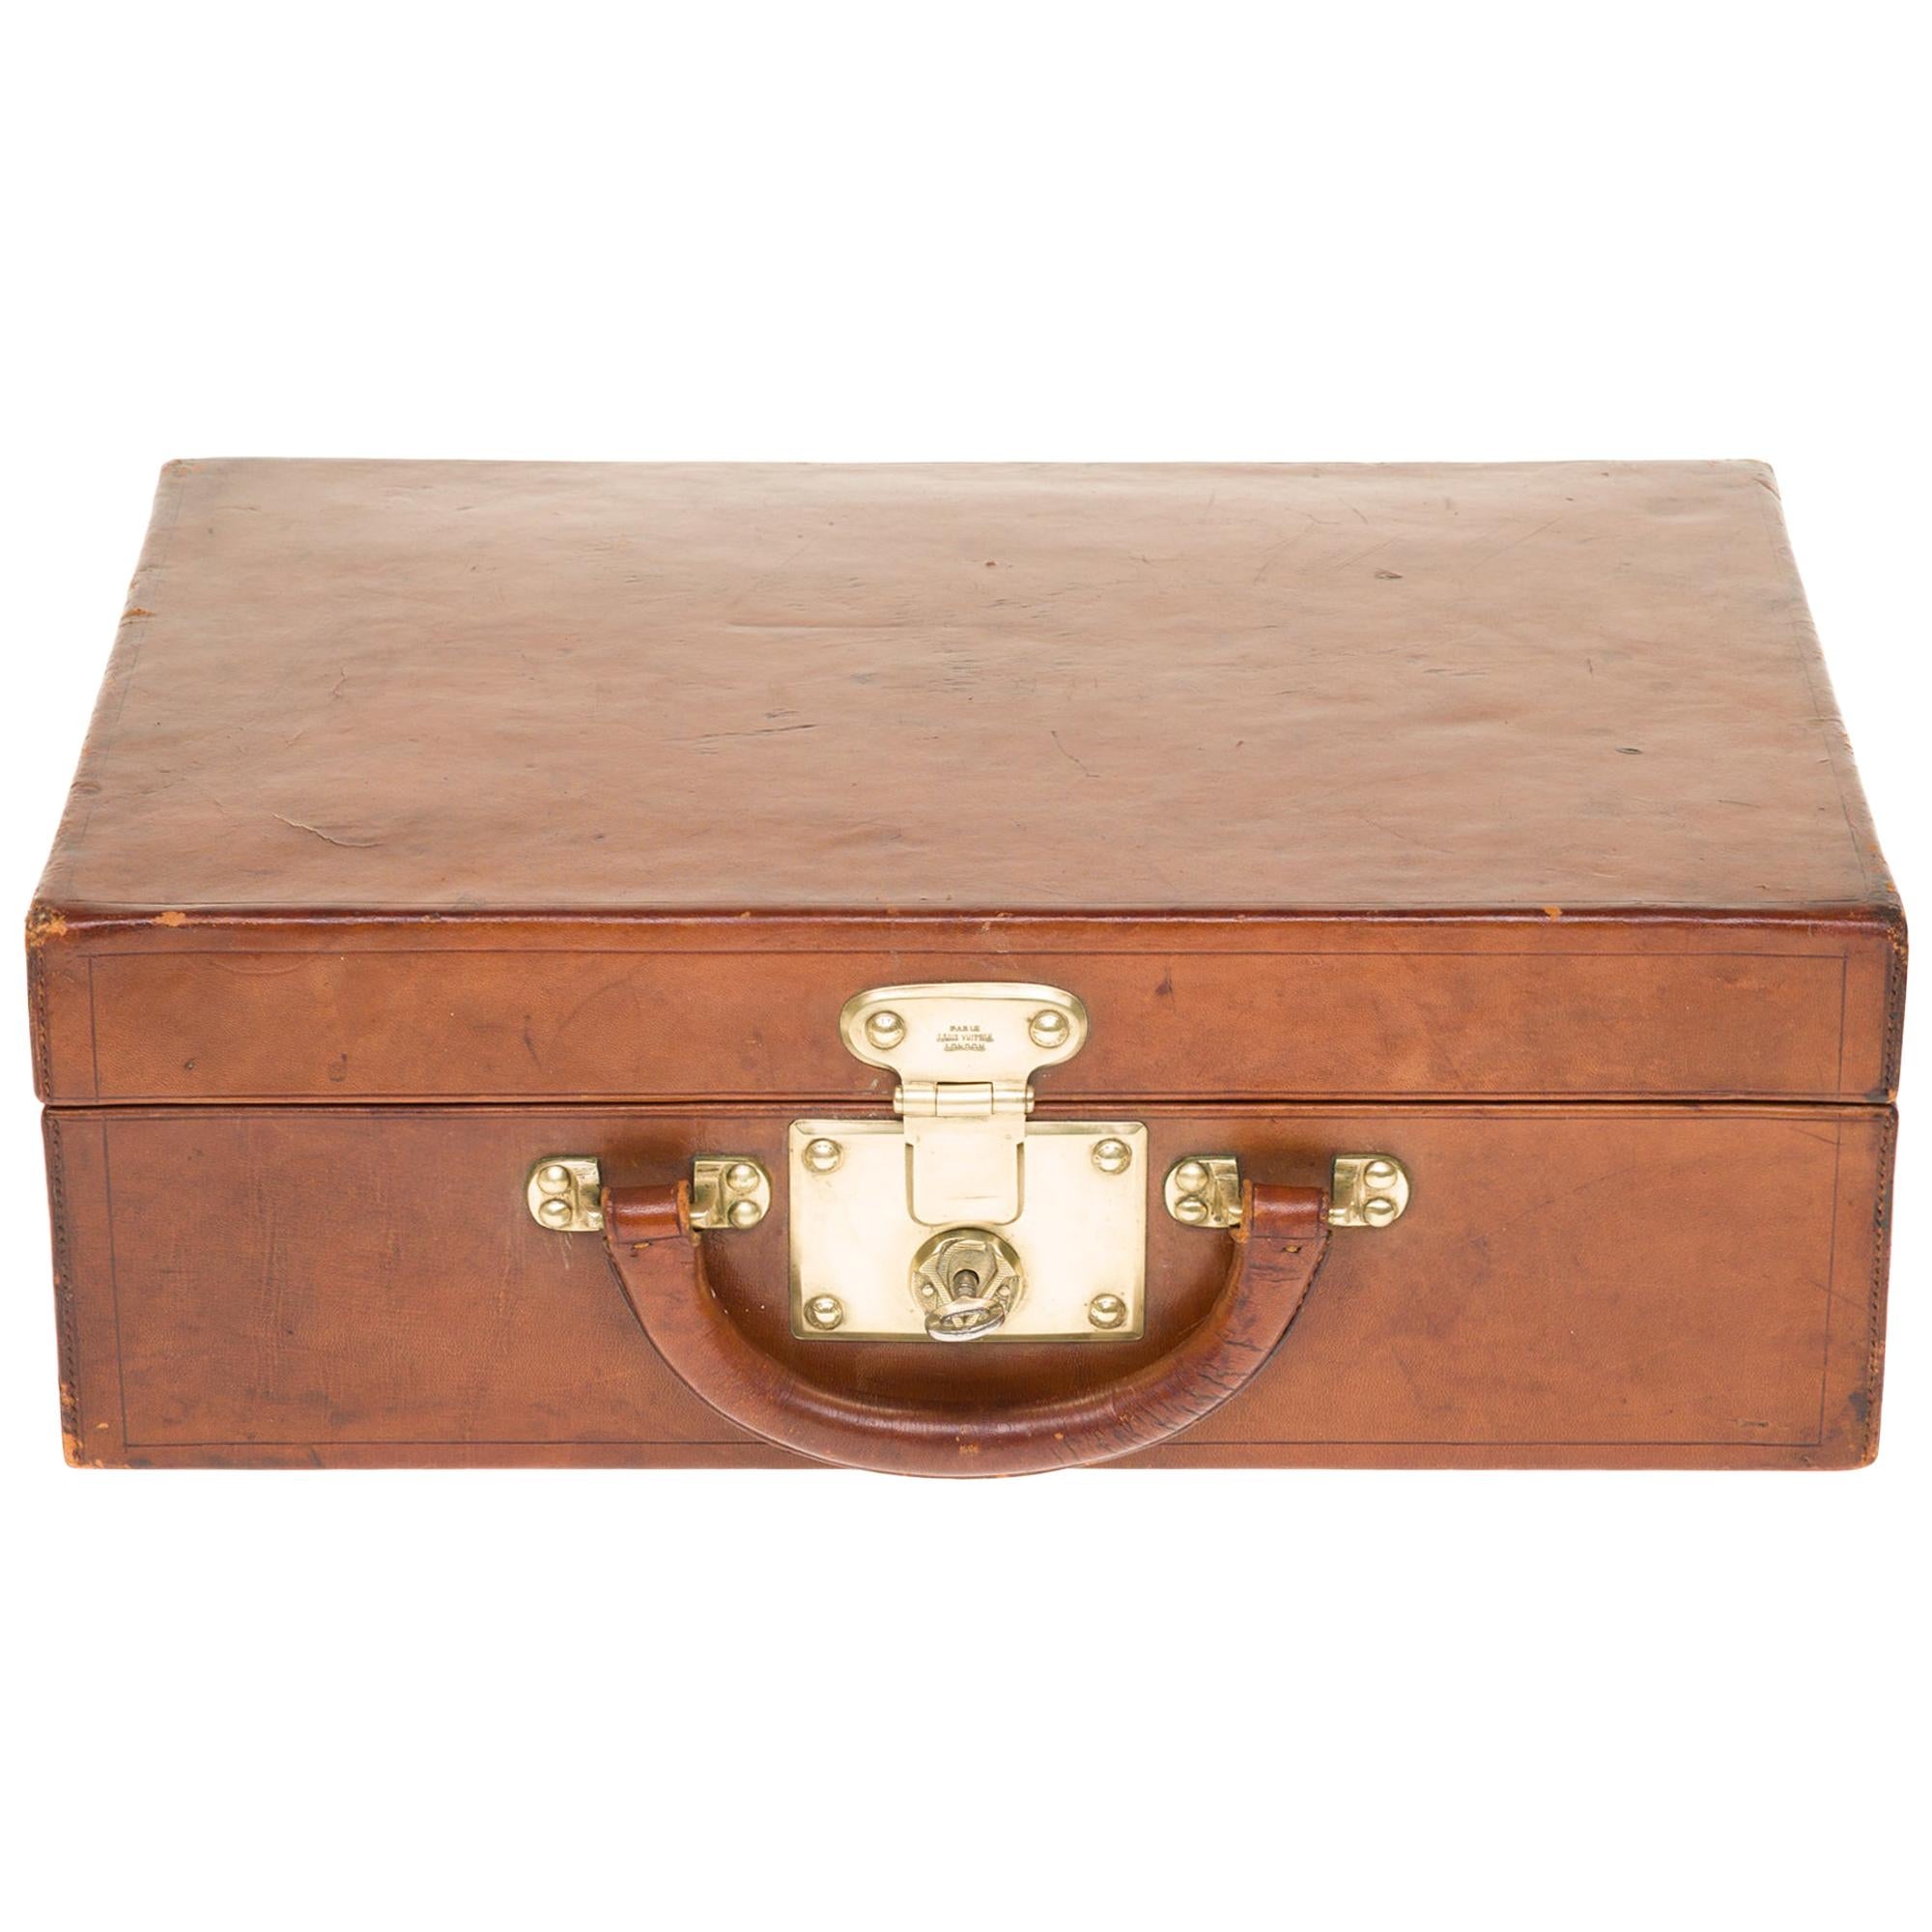 VERY RARE/COLLECTIBLE/ Louis Vuitton Suitcase-Vanity in brown calf